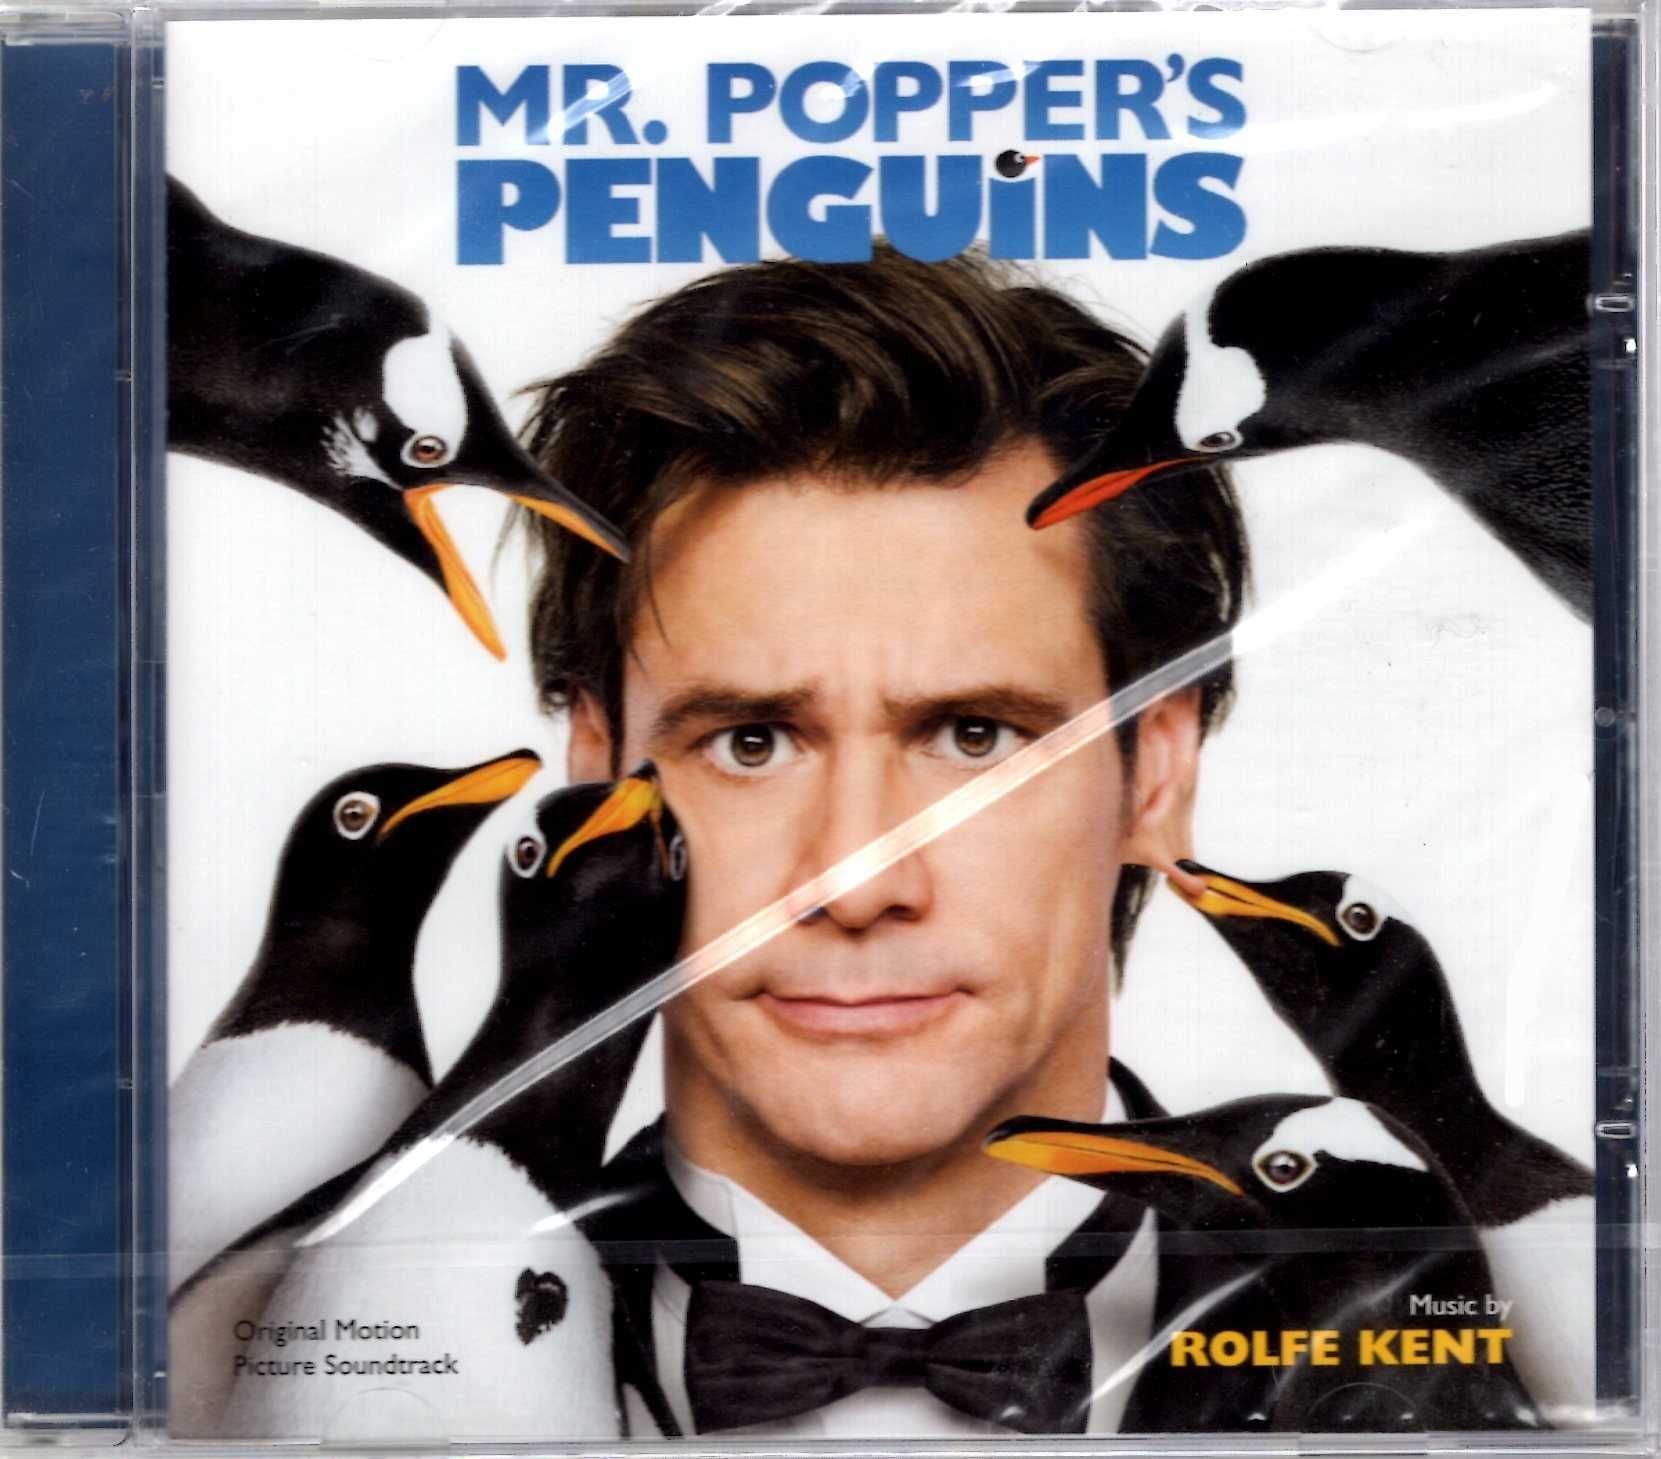 Mr. Popper's Penguins - Rolfe Kent (CD)